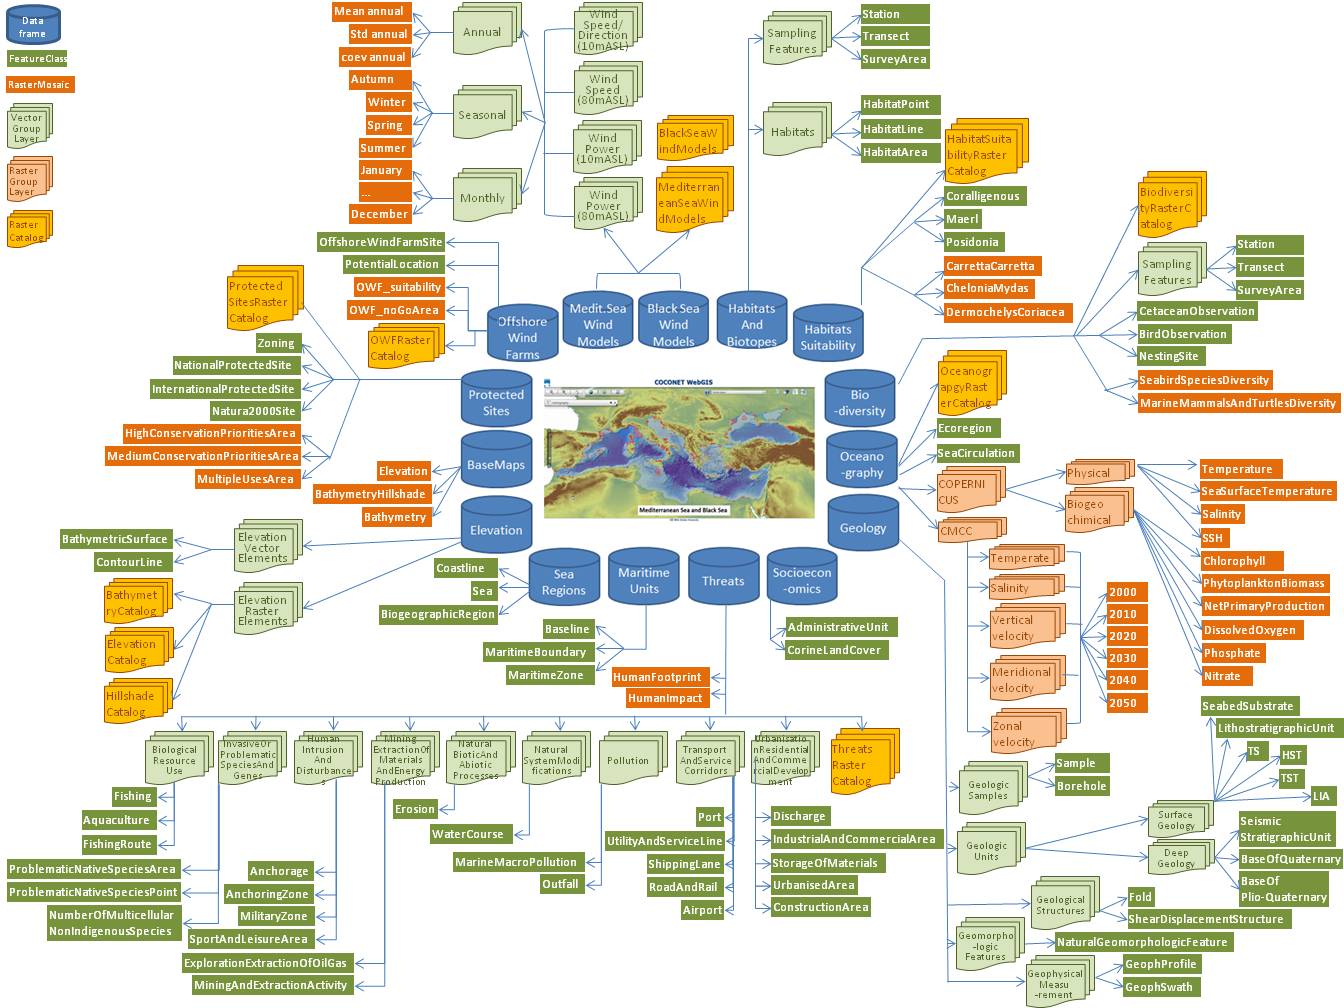 WebGIS platform map - Large scale